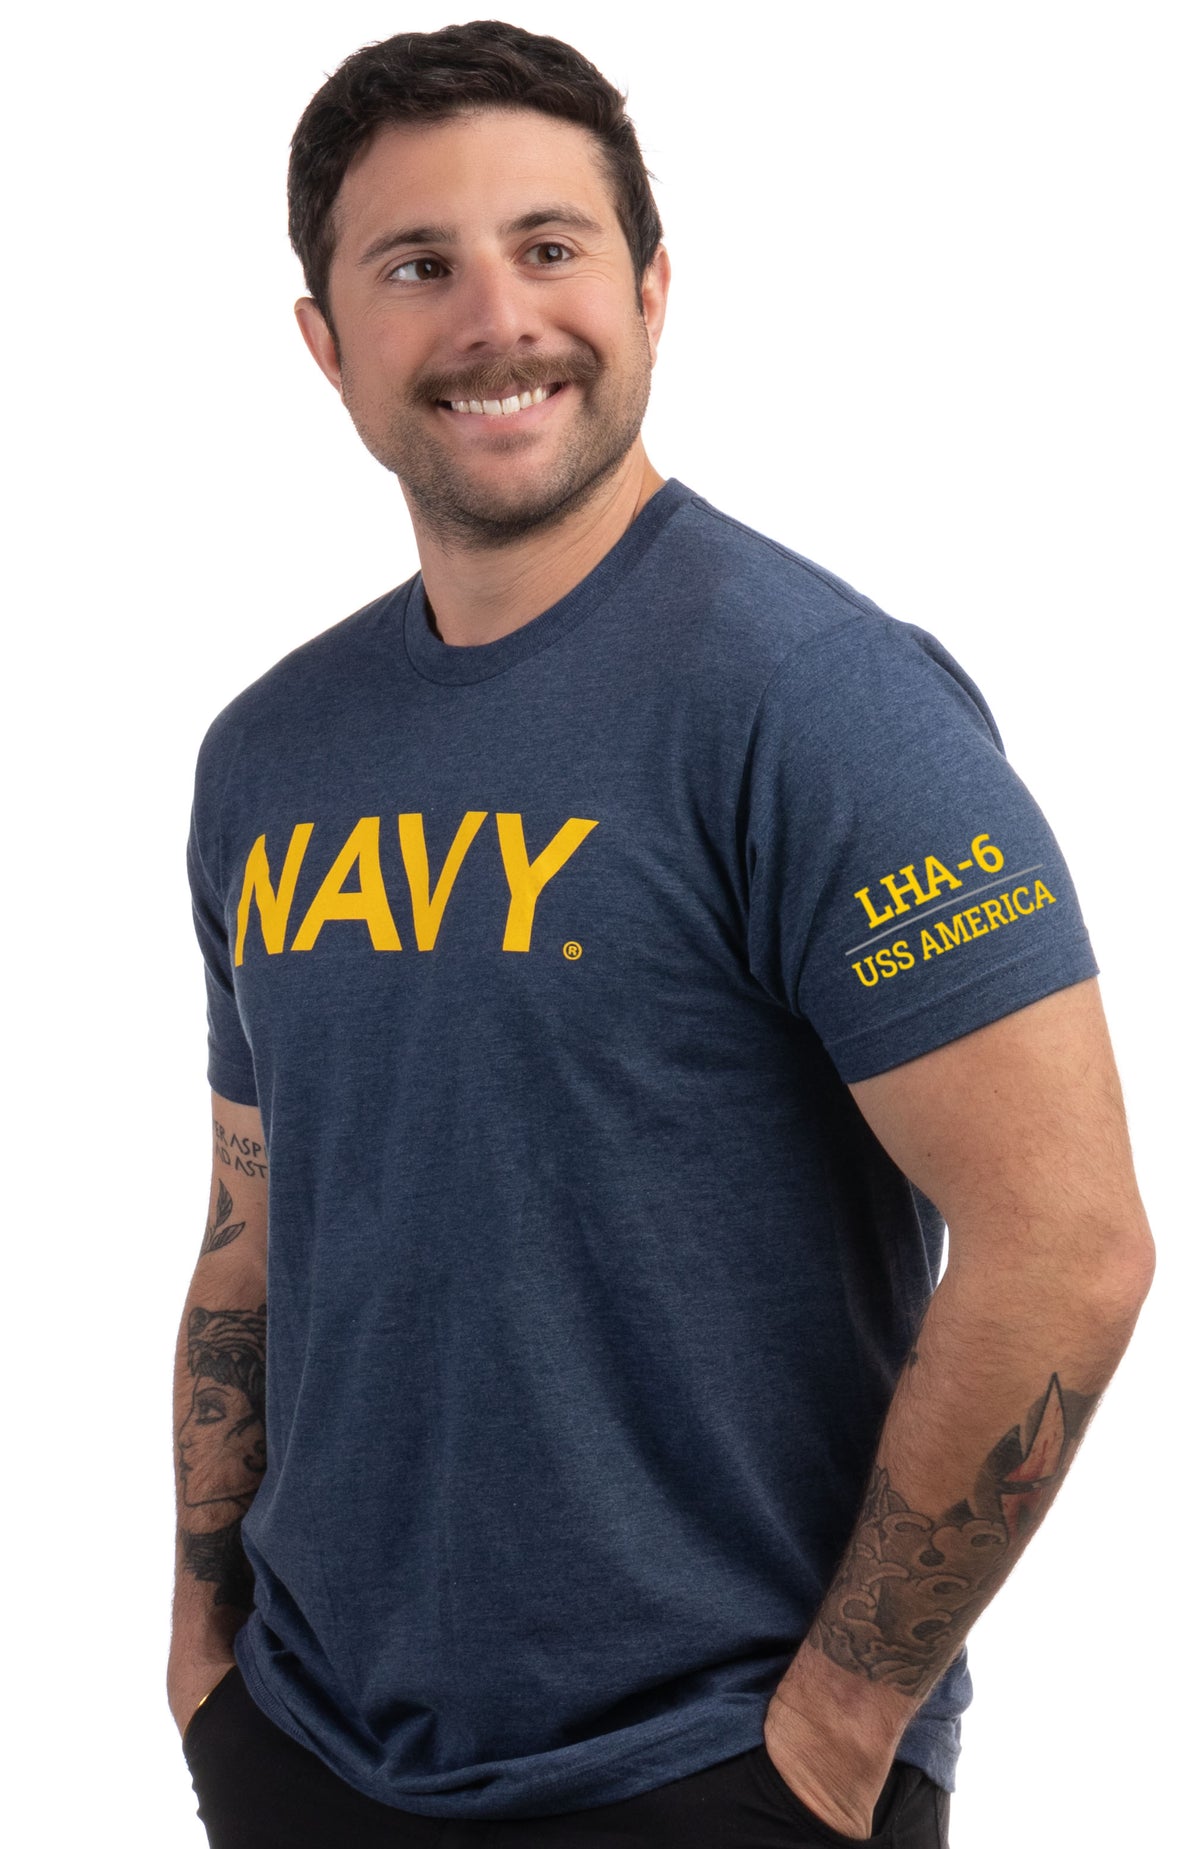 USS America, LHA-6 | U.S. Navy Sailor Veteran USN United States Naval T-shirt for Men Women